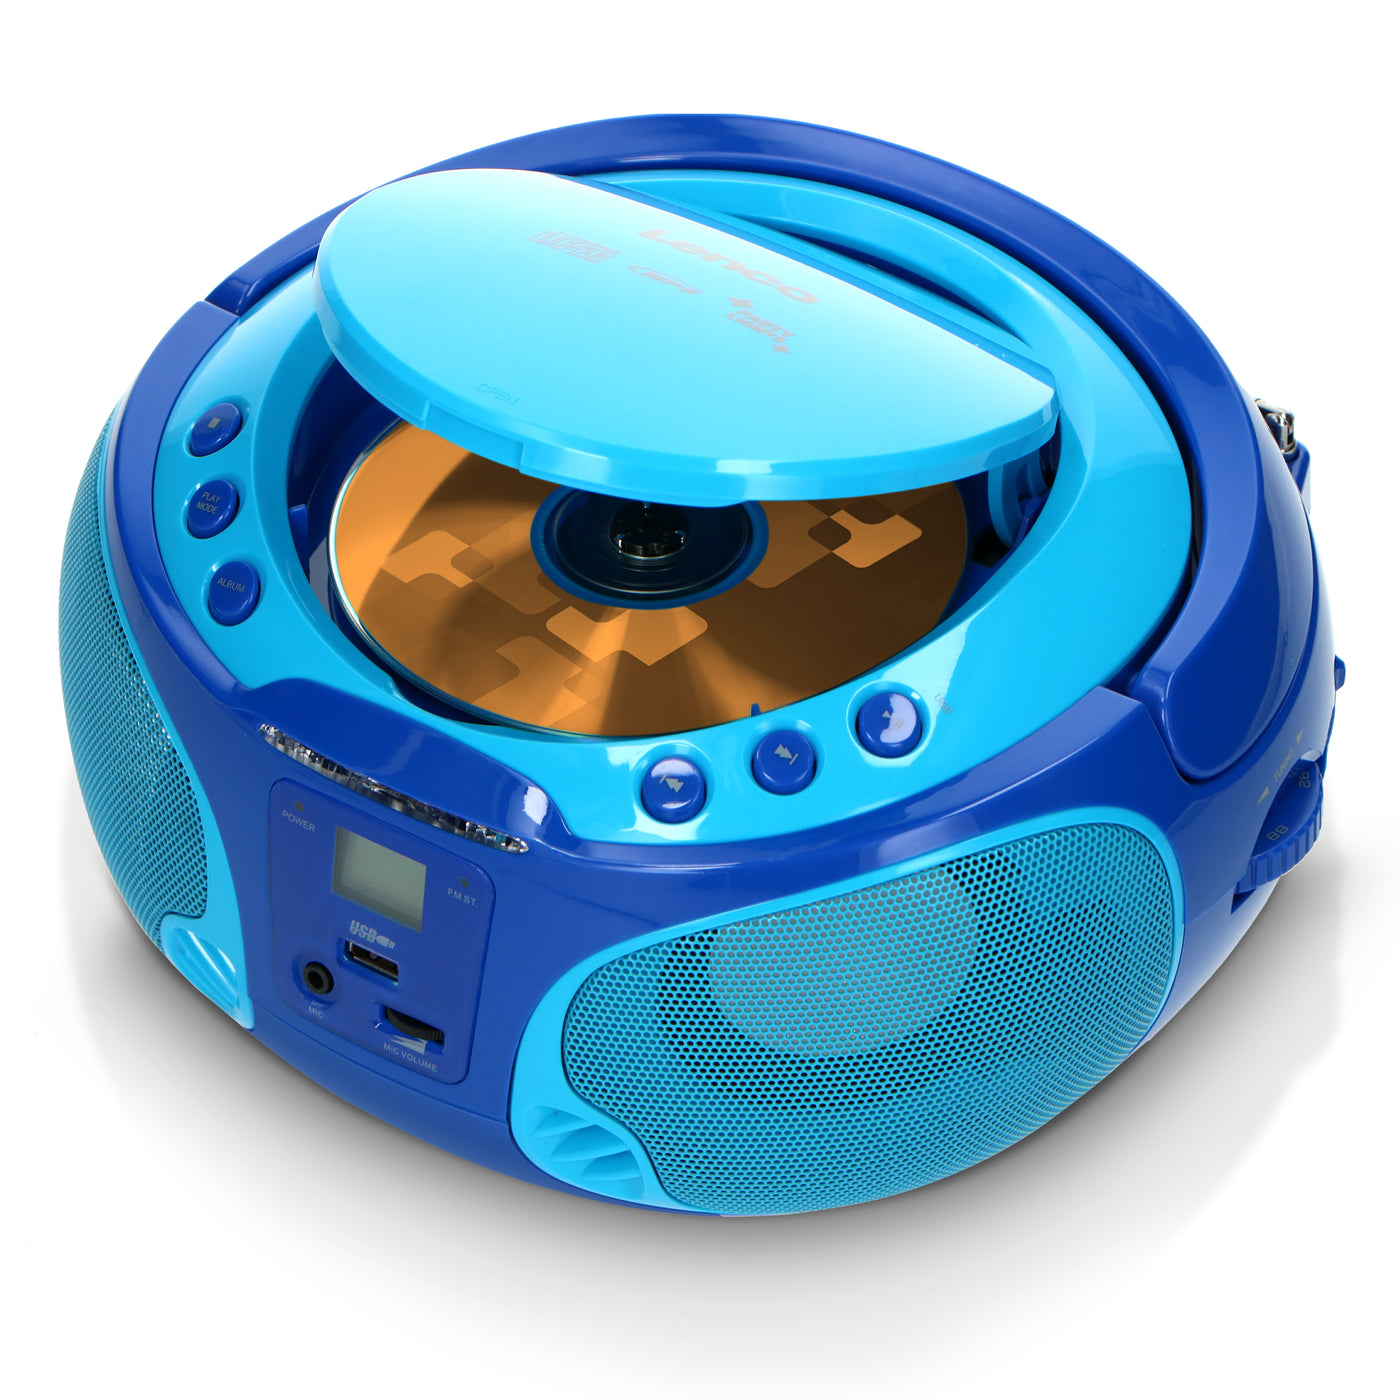 LENCO SCD-650BU Draagbare FM Radio CD/MP3/USB microfoon en licht effecten - Blauw